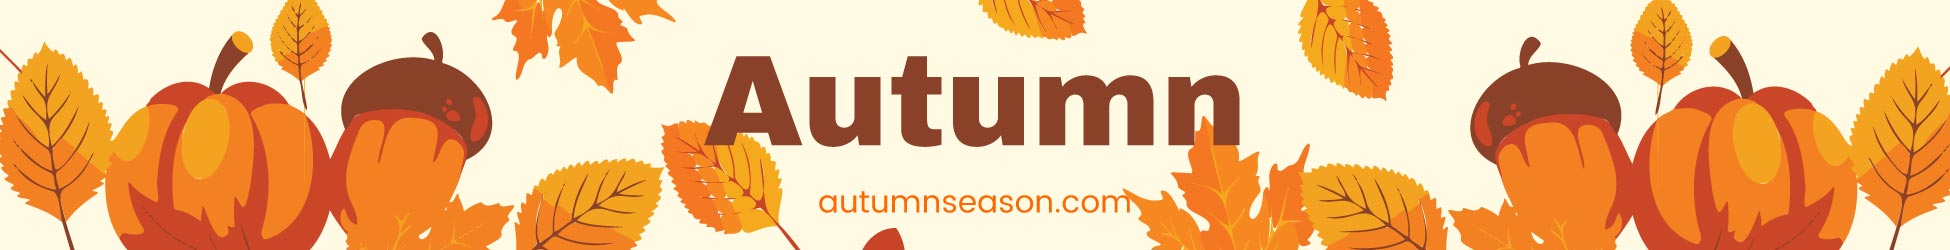 Autumn Website Banner in Illustrator, PSD, EPS, SVG, JPG, PNG